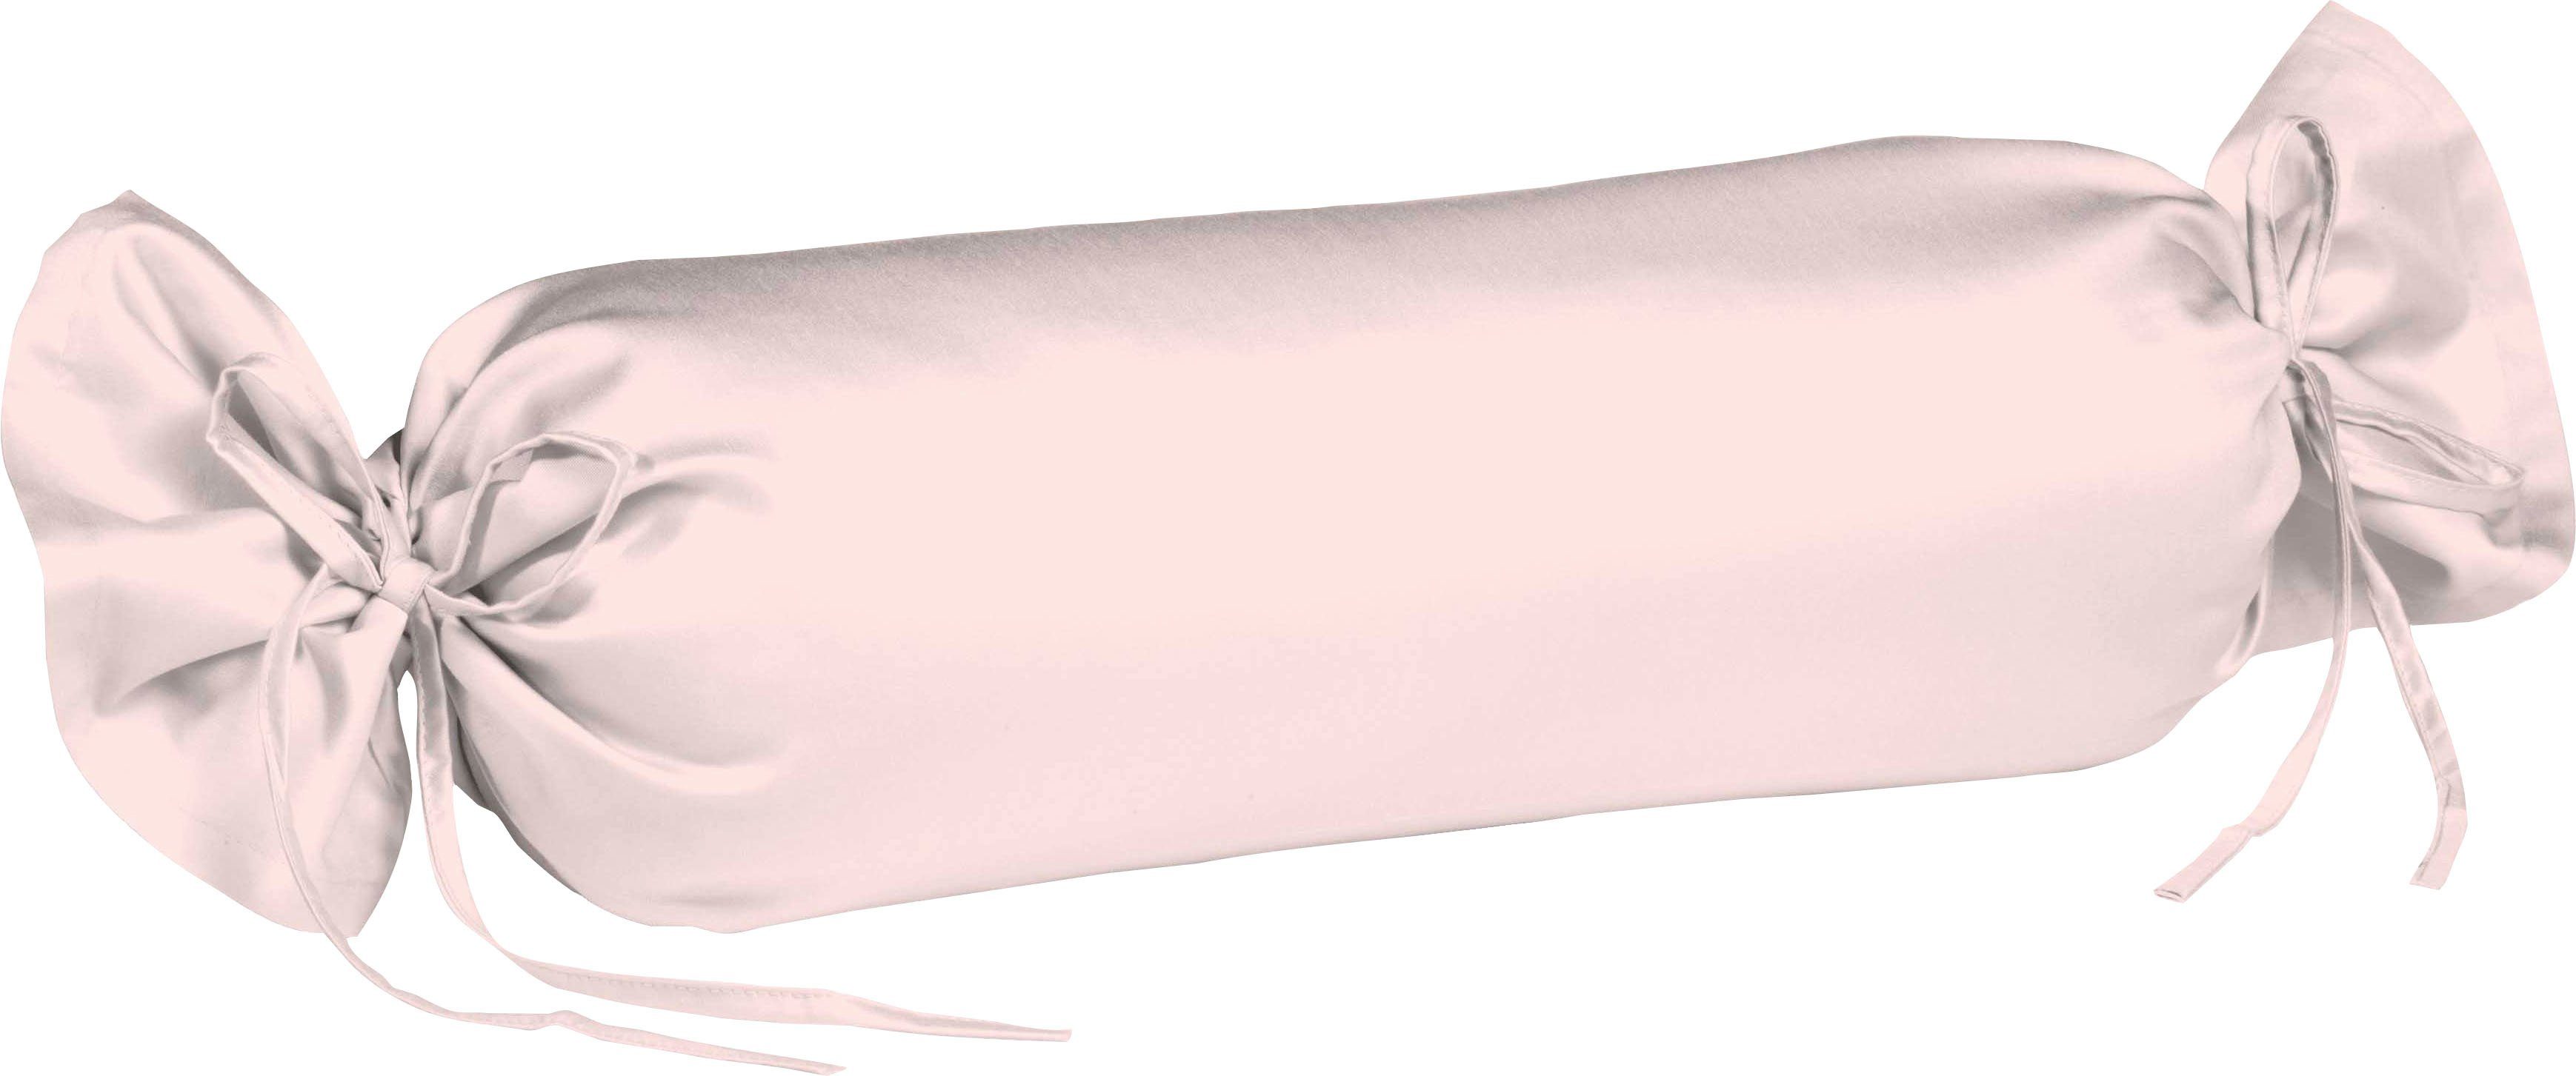 rosé Interlock Colours Nackenrollenbezug Stück), in Jersey, Qualität fleuresse Interlock (2 bügelfreier